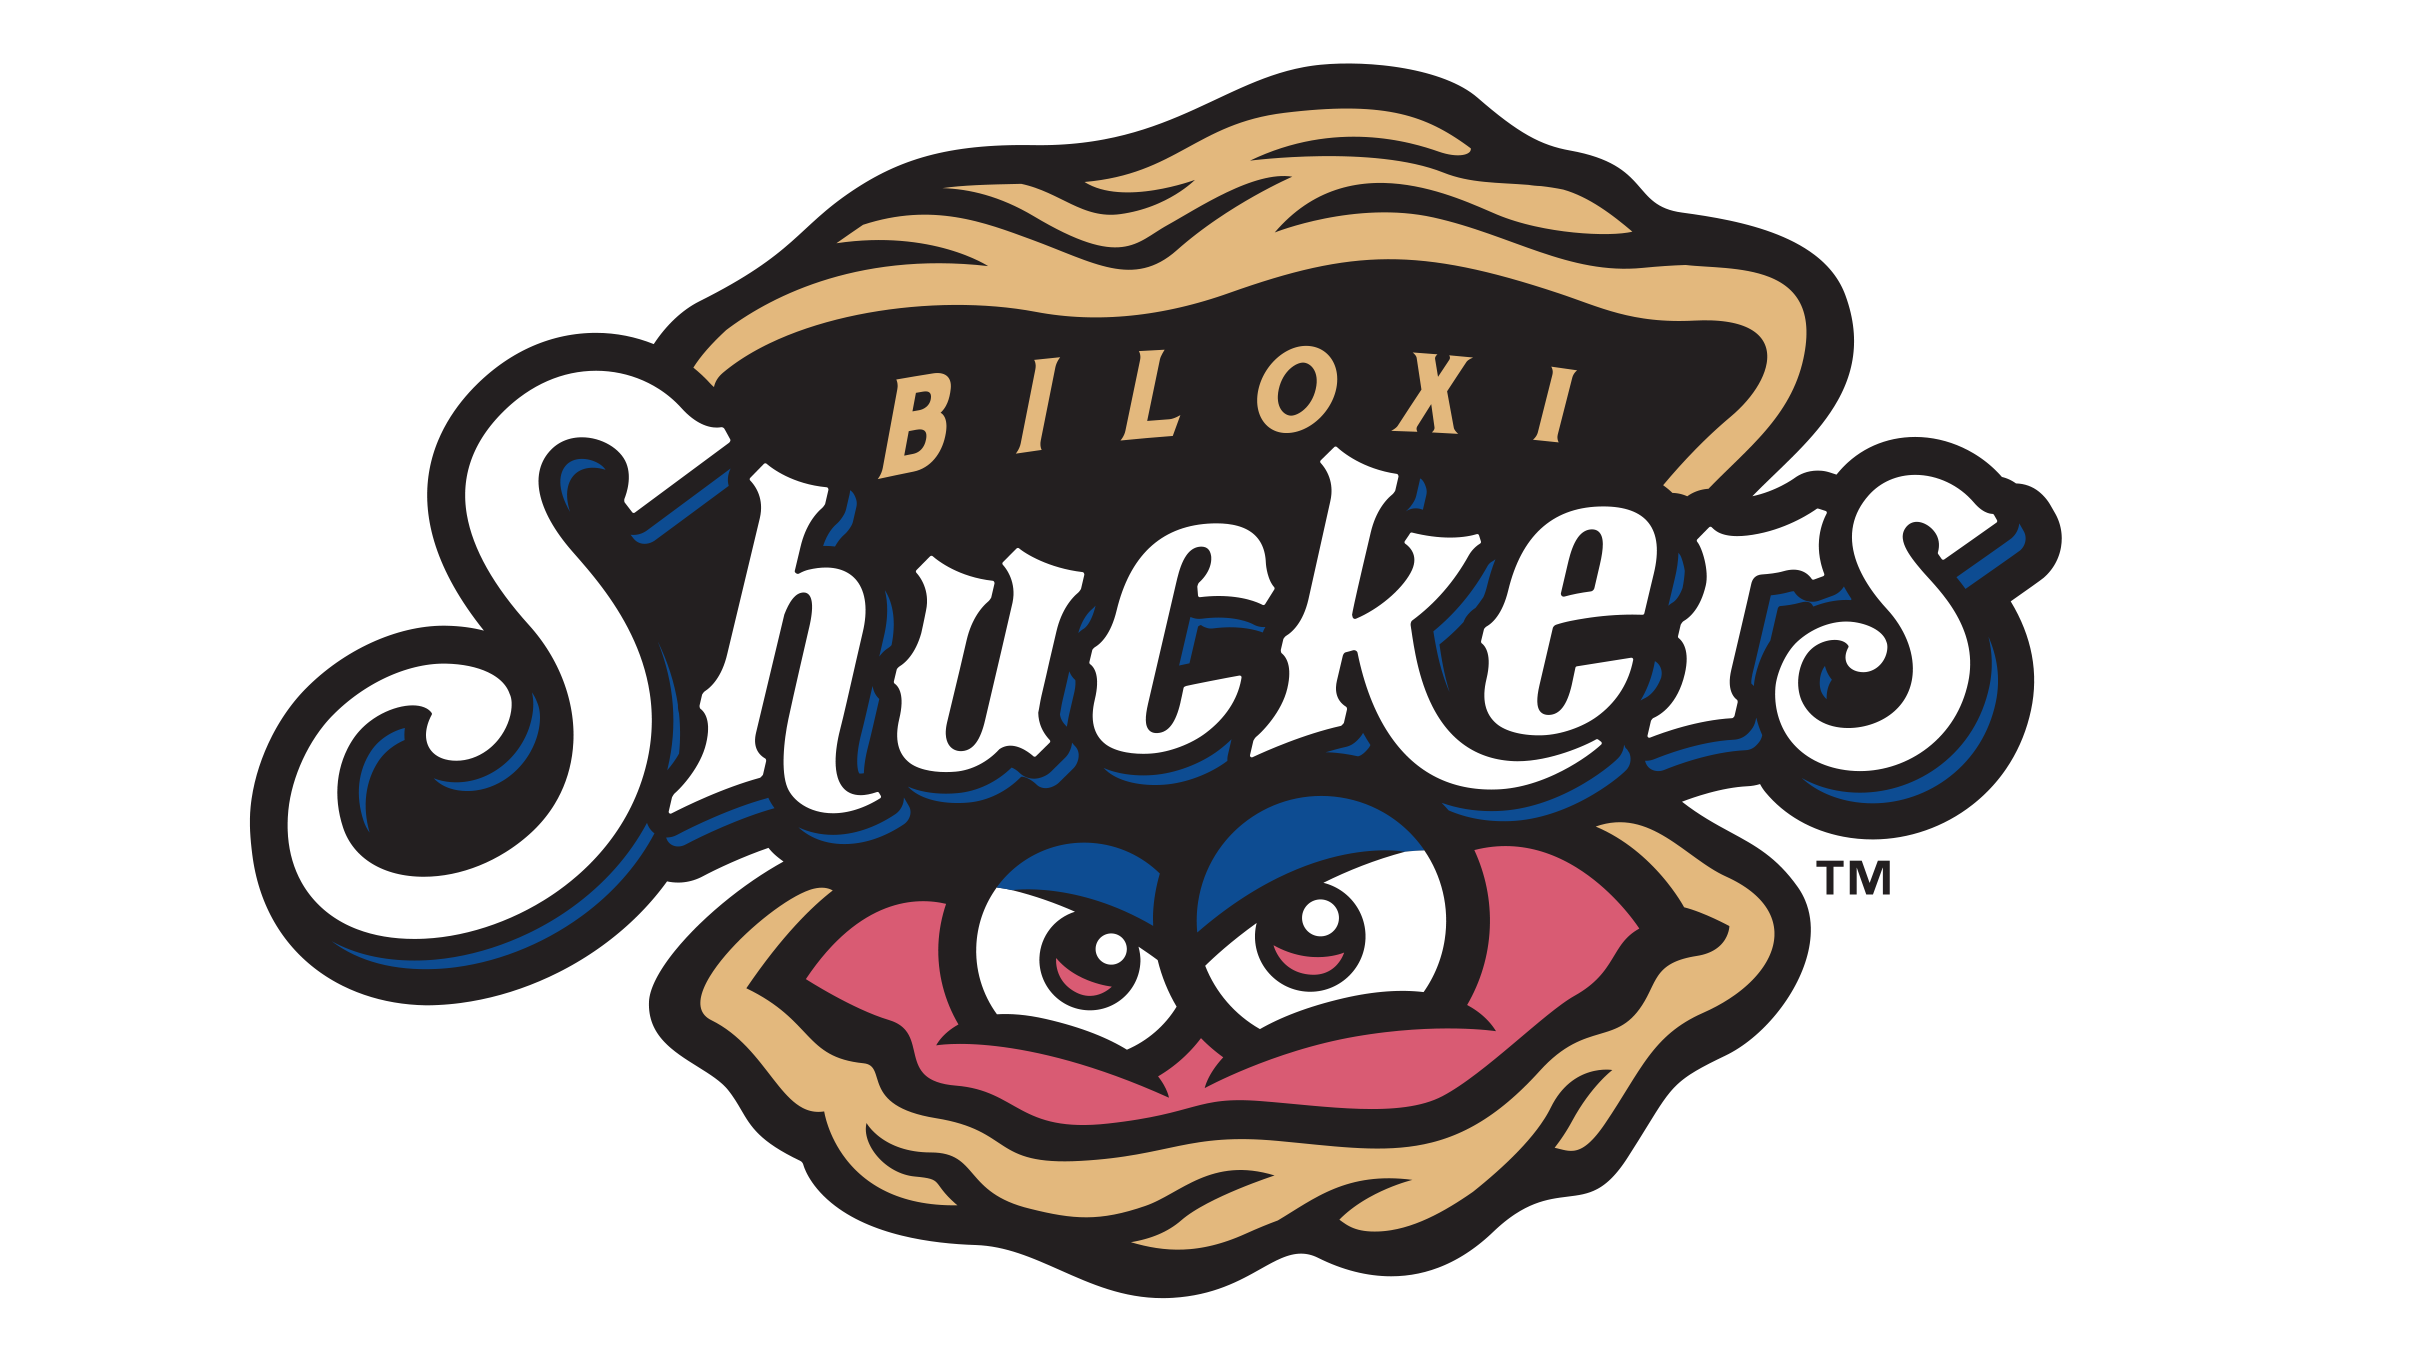 Biloxi Shuckers vs. Mississippi Braves at MGM Park